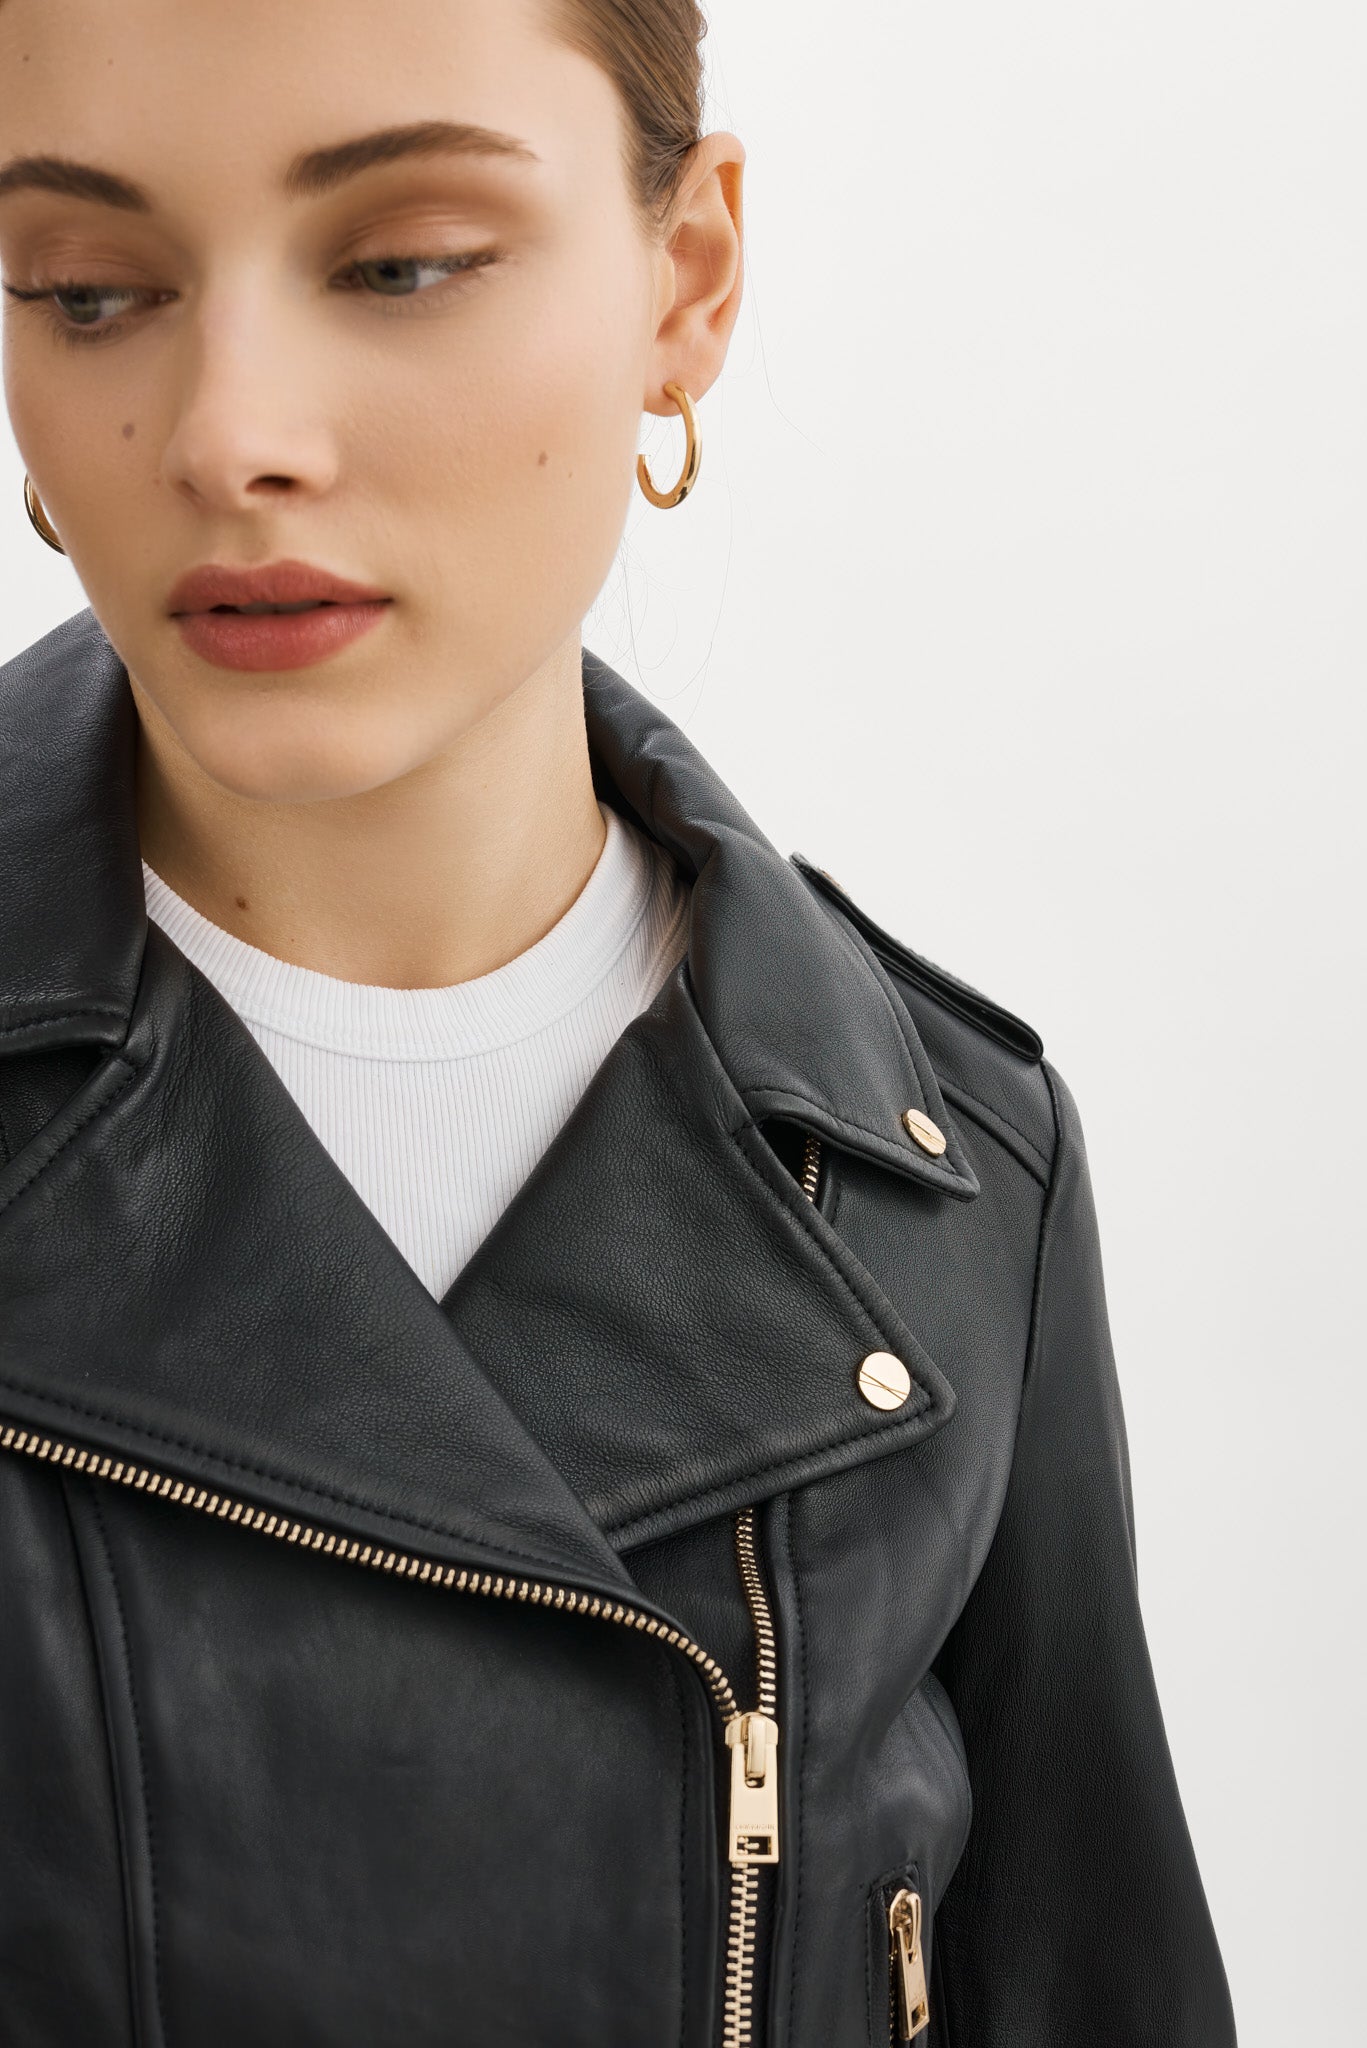 DONNA GOLD | Iconic Leather Biker Jacket – LAMARQUE